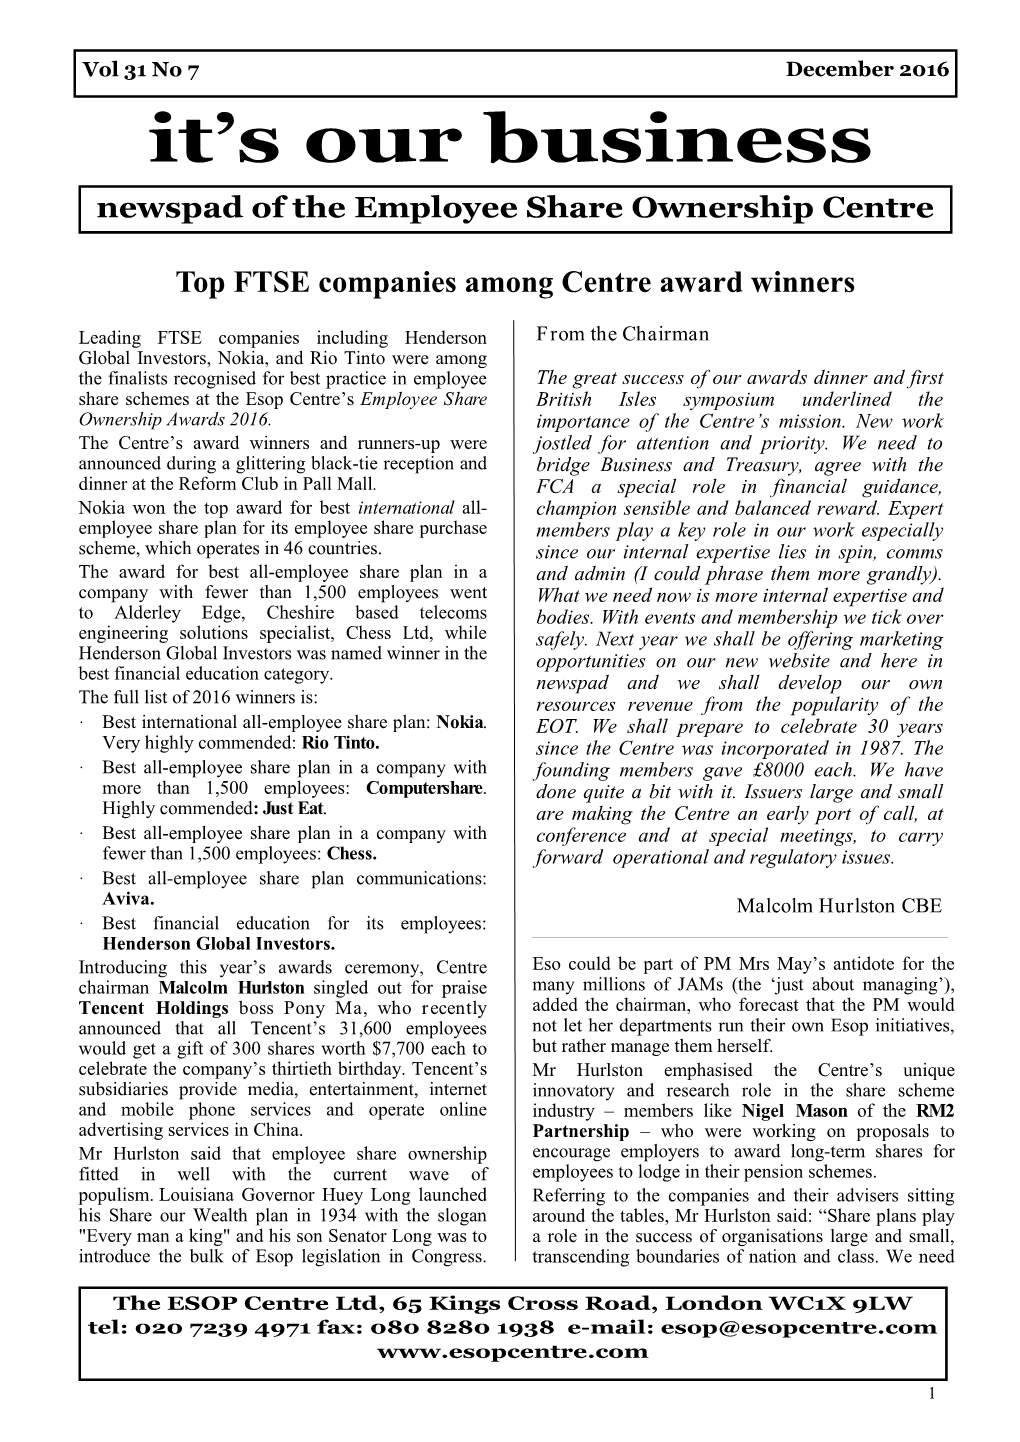 Top FTSE Companies Among Centre Award Winners